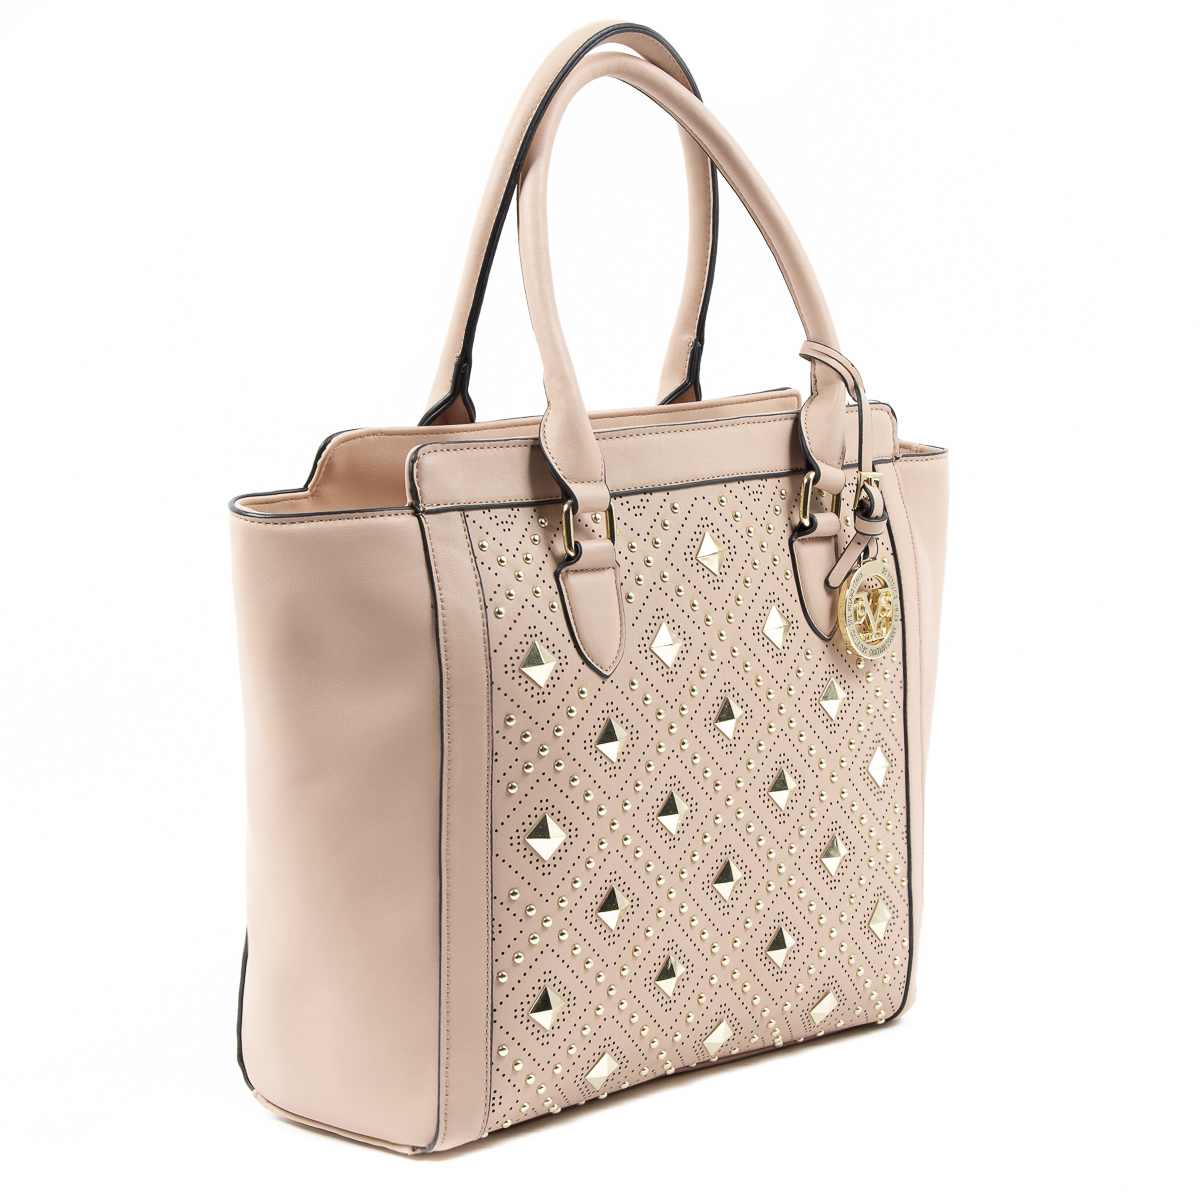 Versace 1969 Italia Women's Handbag Pink ROBERTA - Handbags & Purses